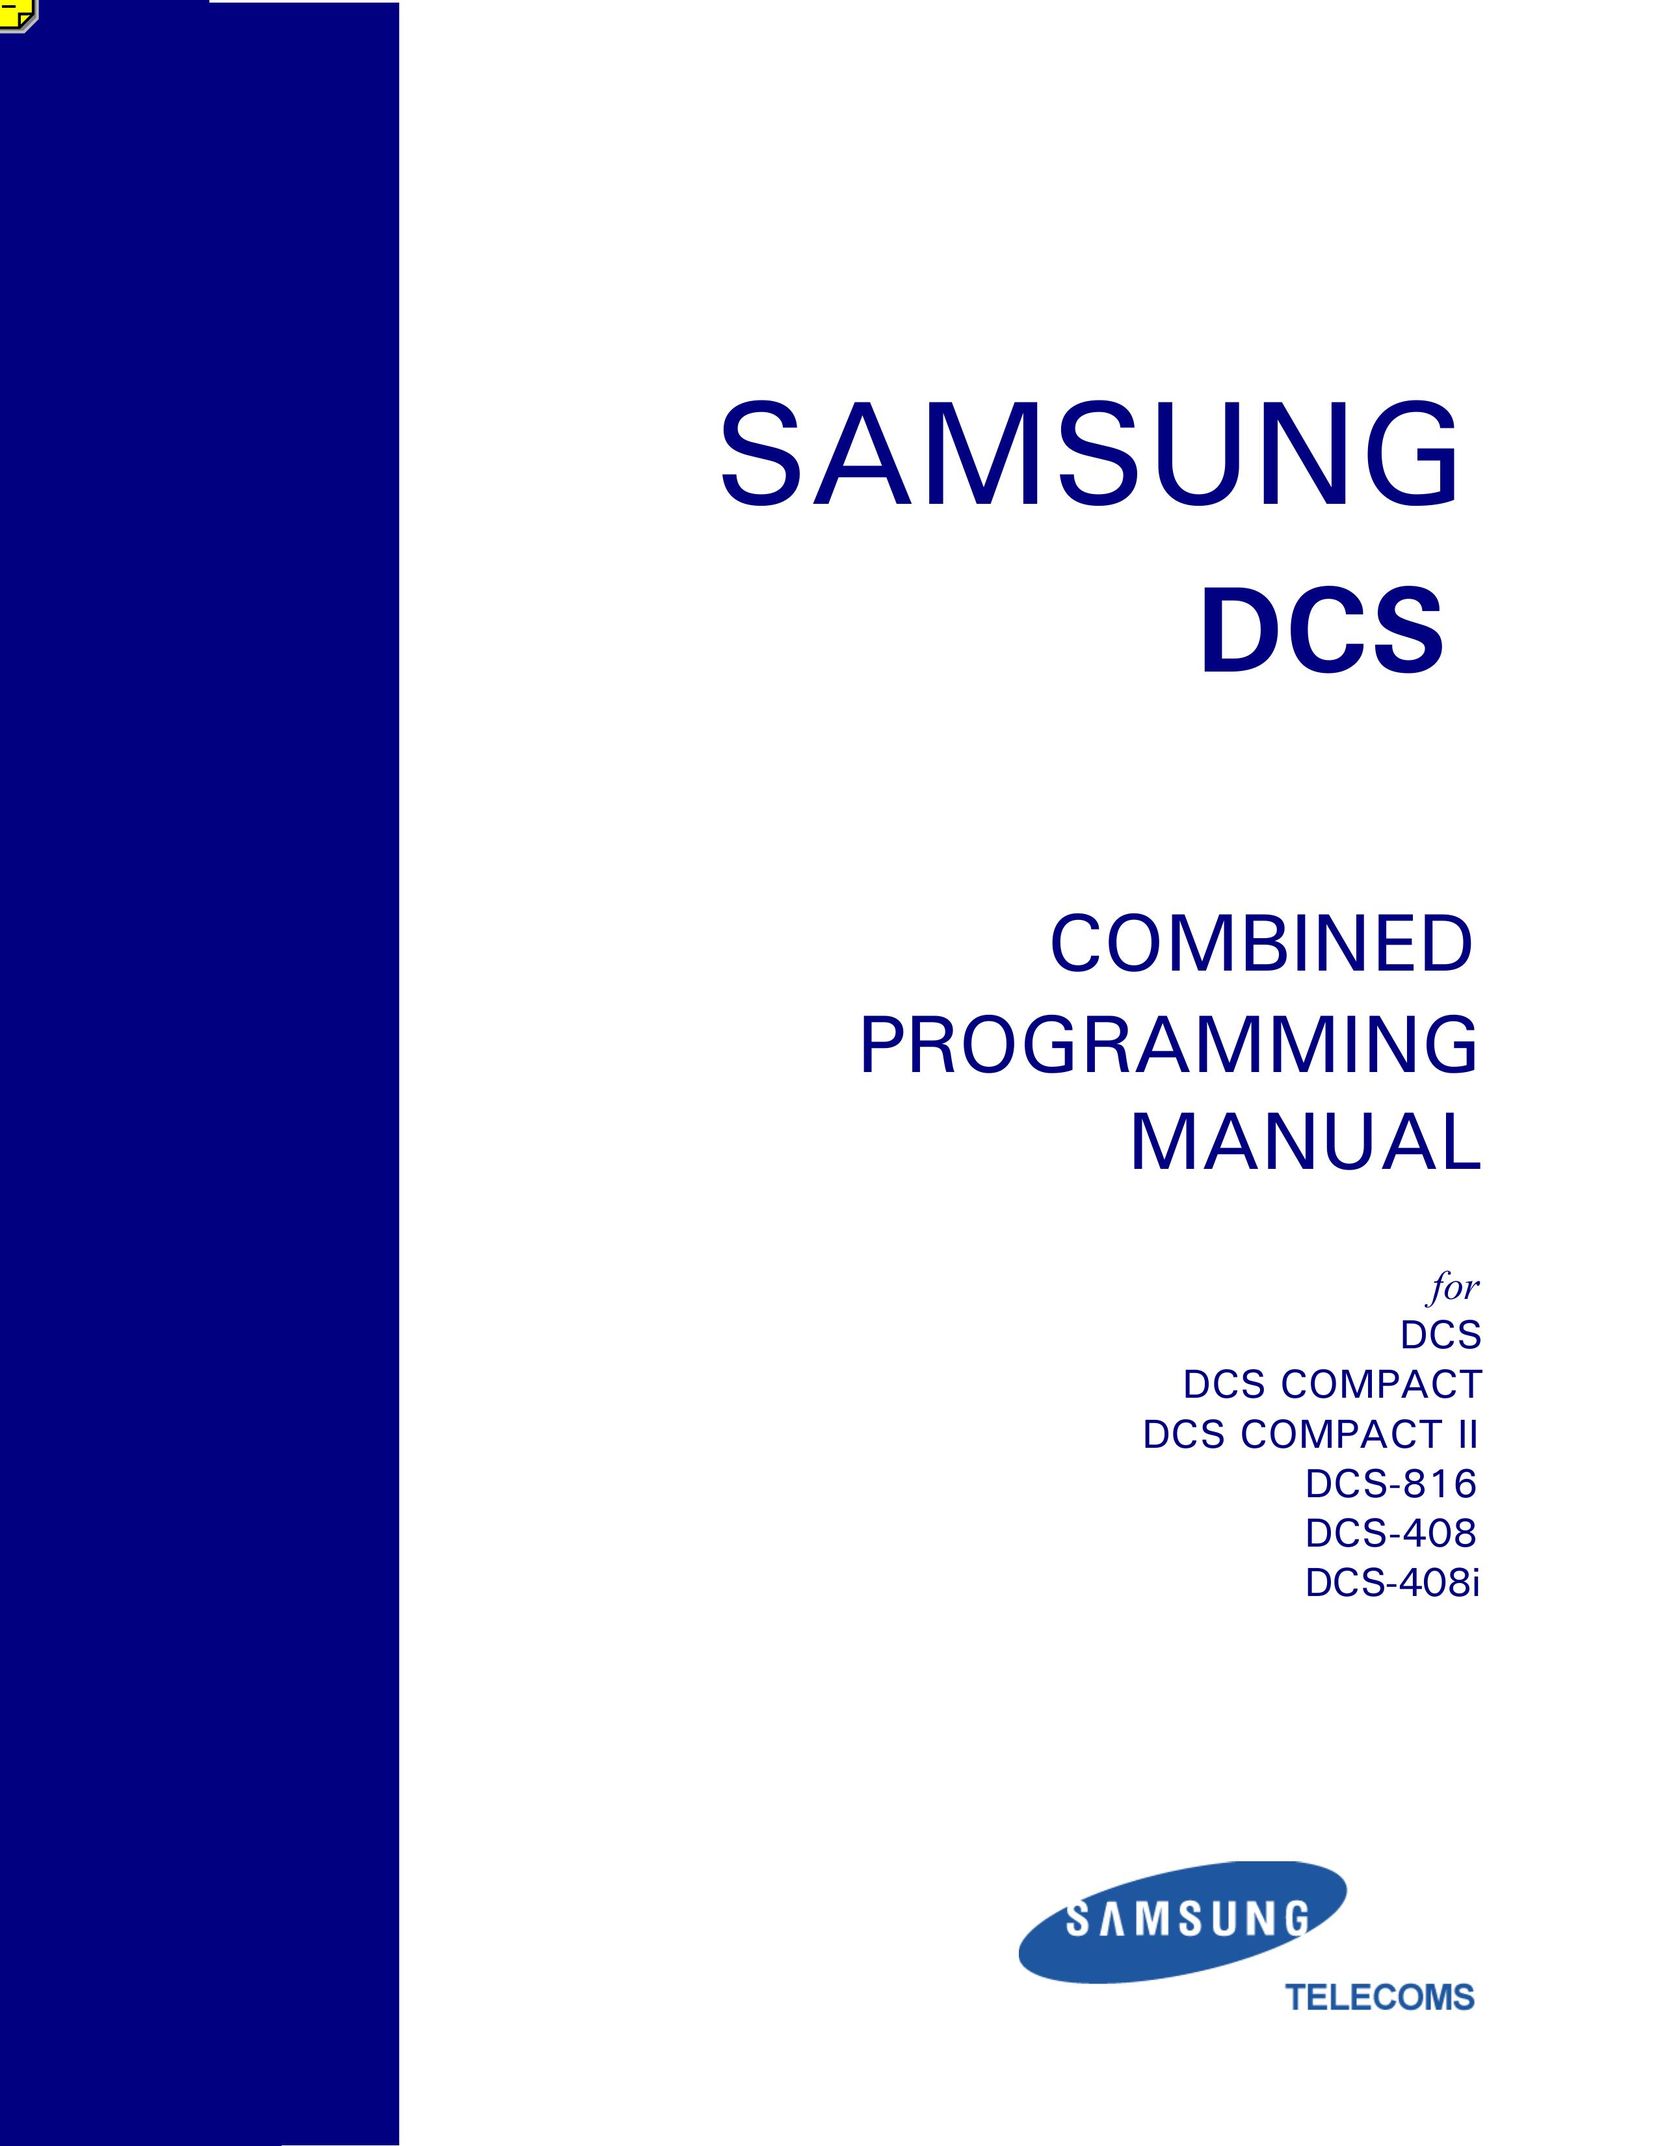 Samsung DCS-408 Telephone User Manual